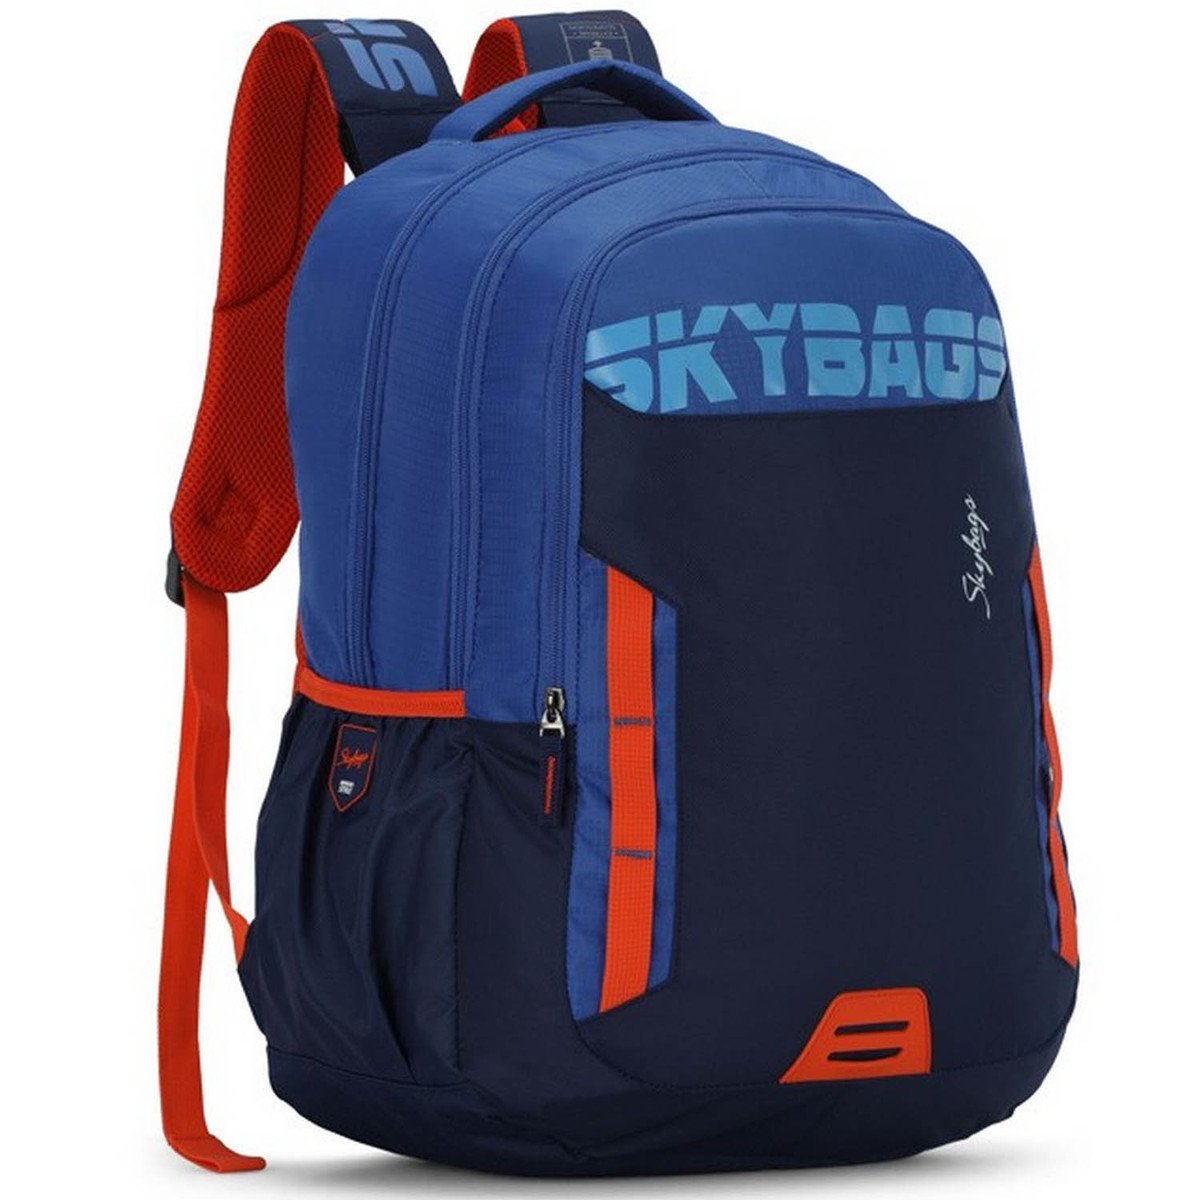 SkyBags School Back Pack Figo Extra SKBPFIGE2 Blue 19inch Online at ...